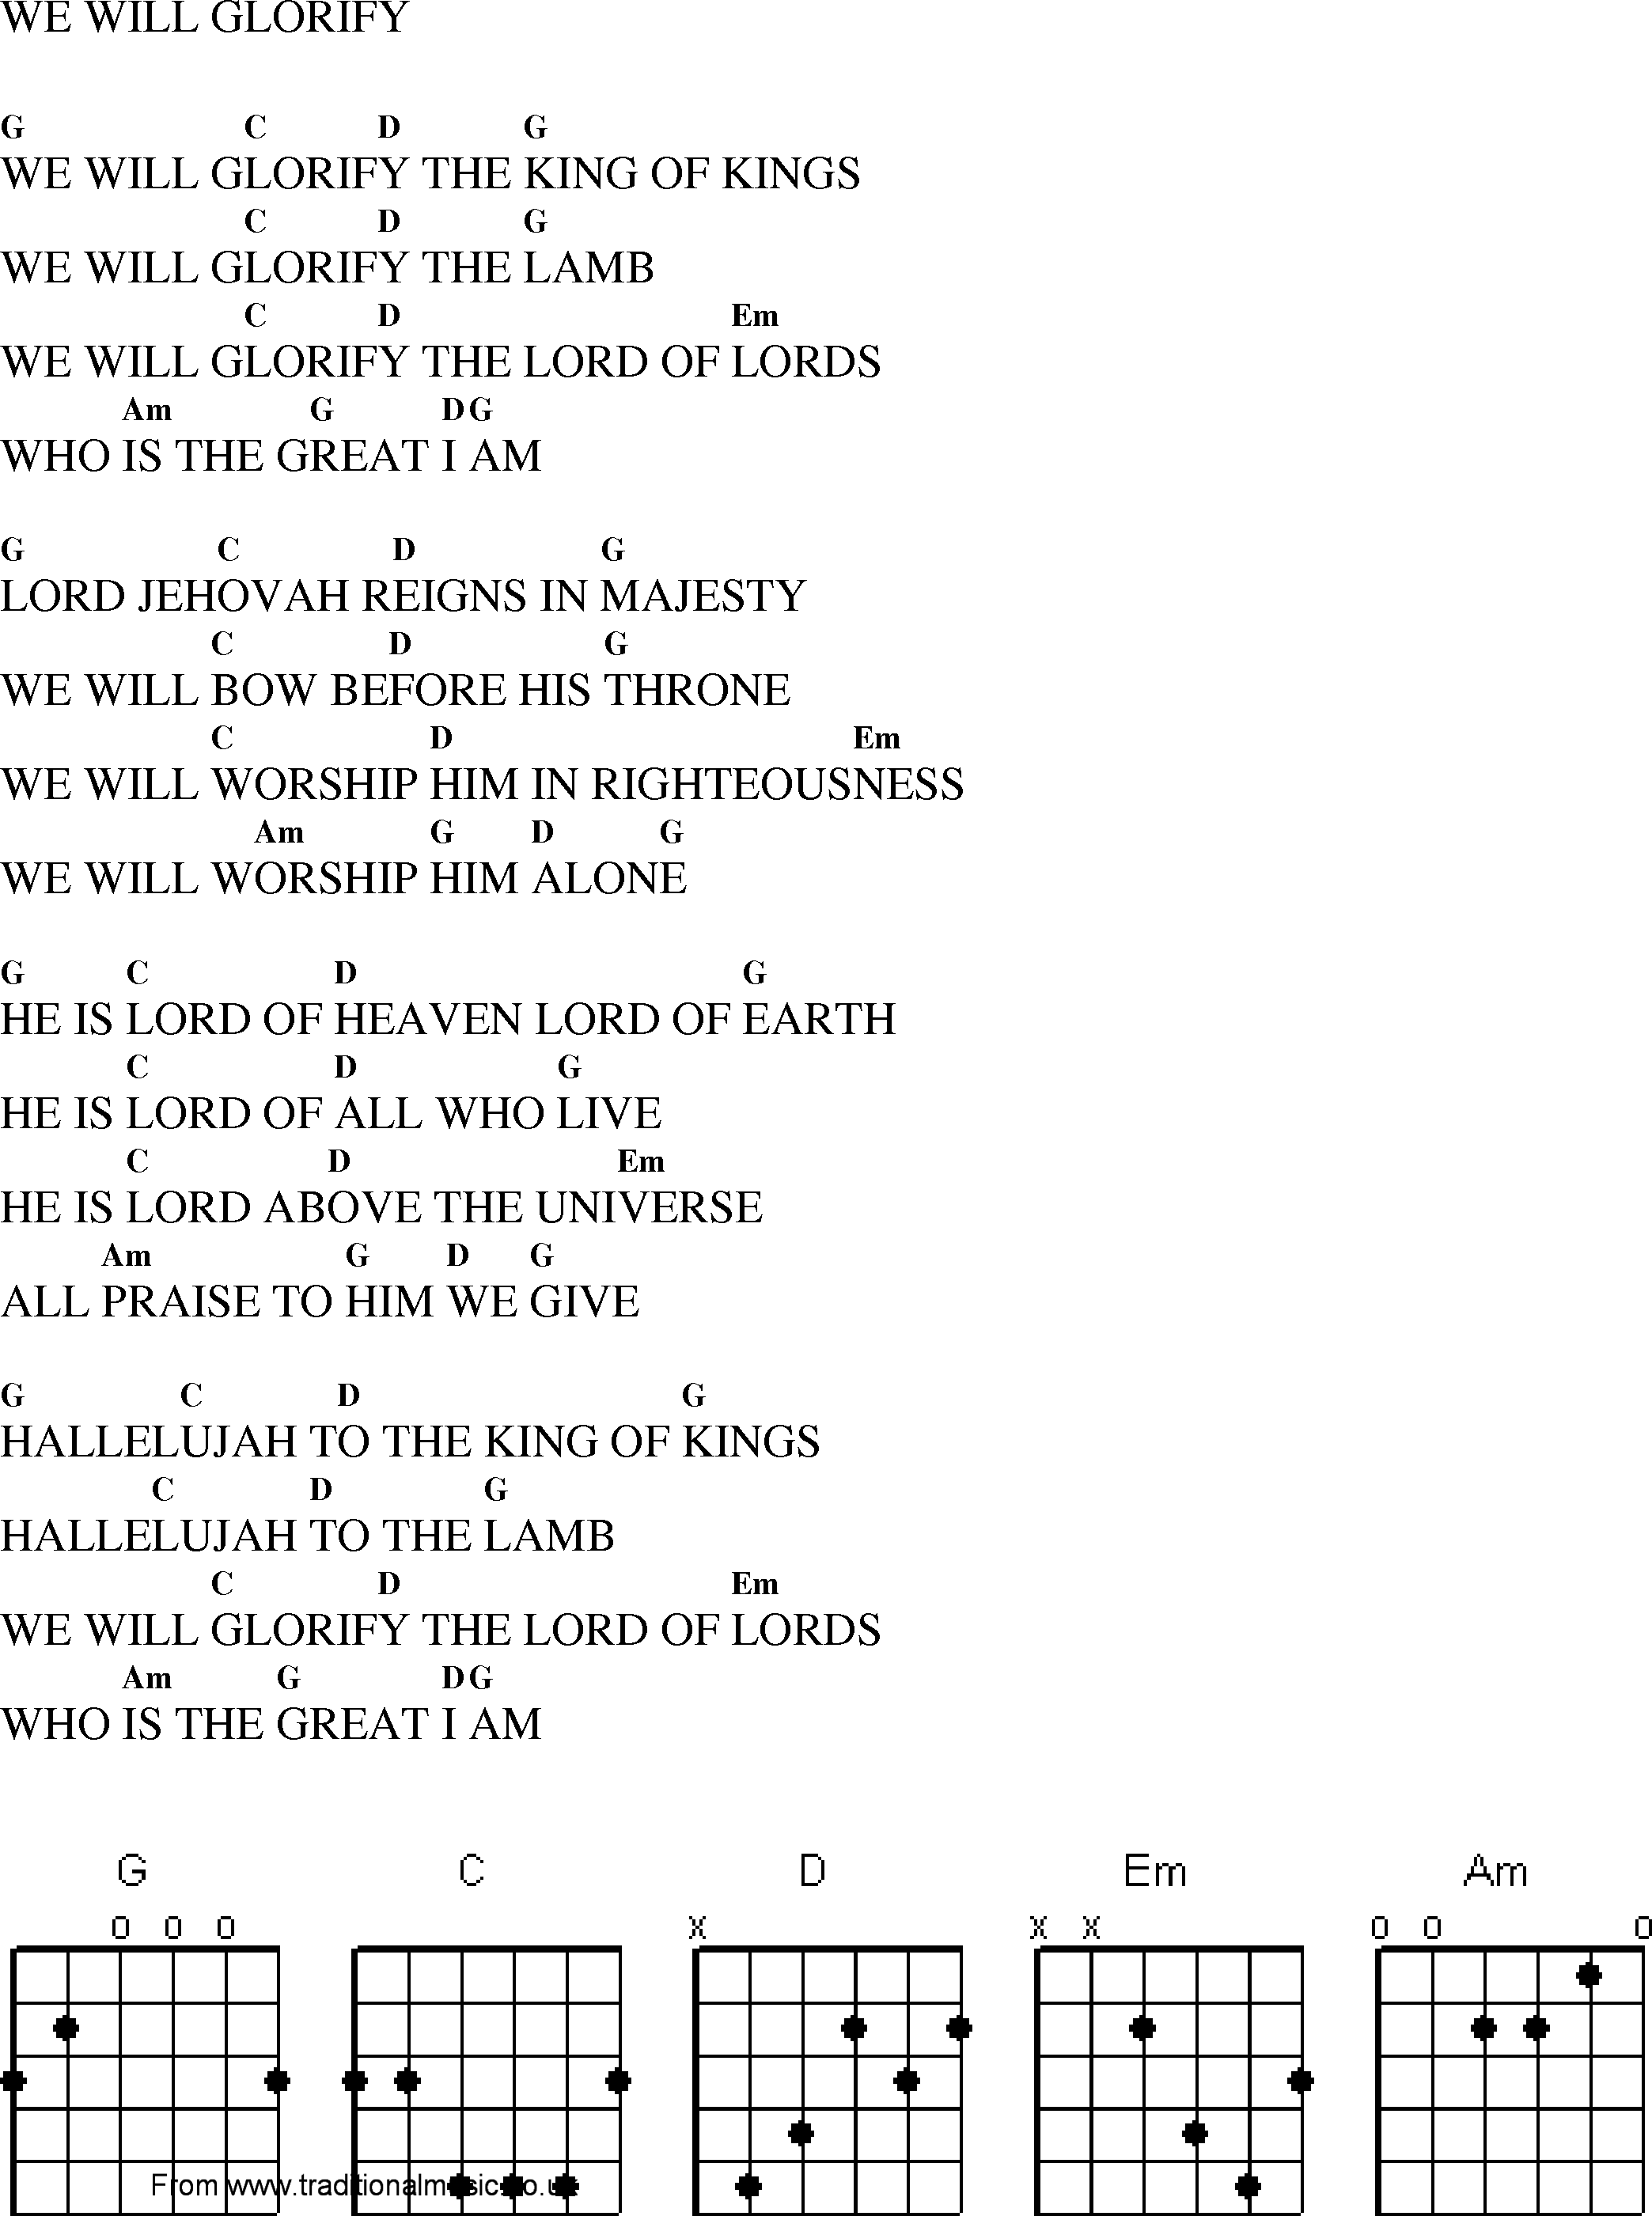 Gospel Song: we_will_glorify, lyrics and chords.